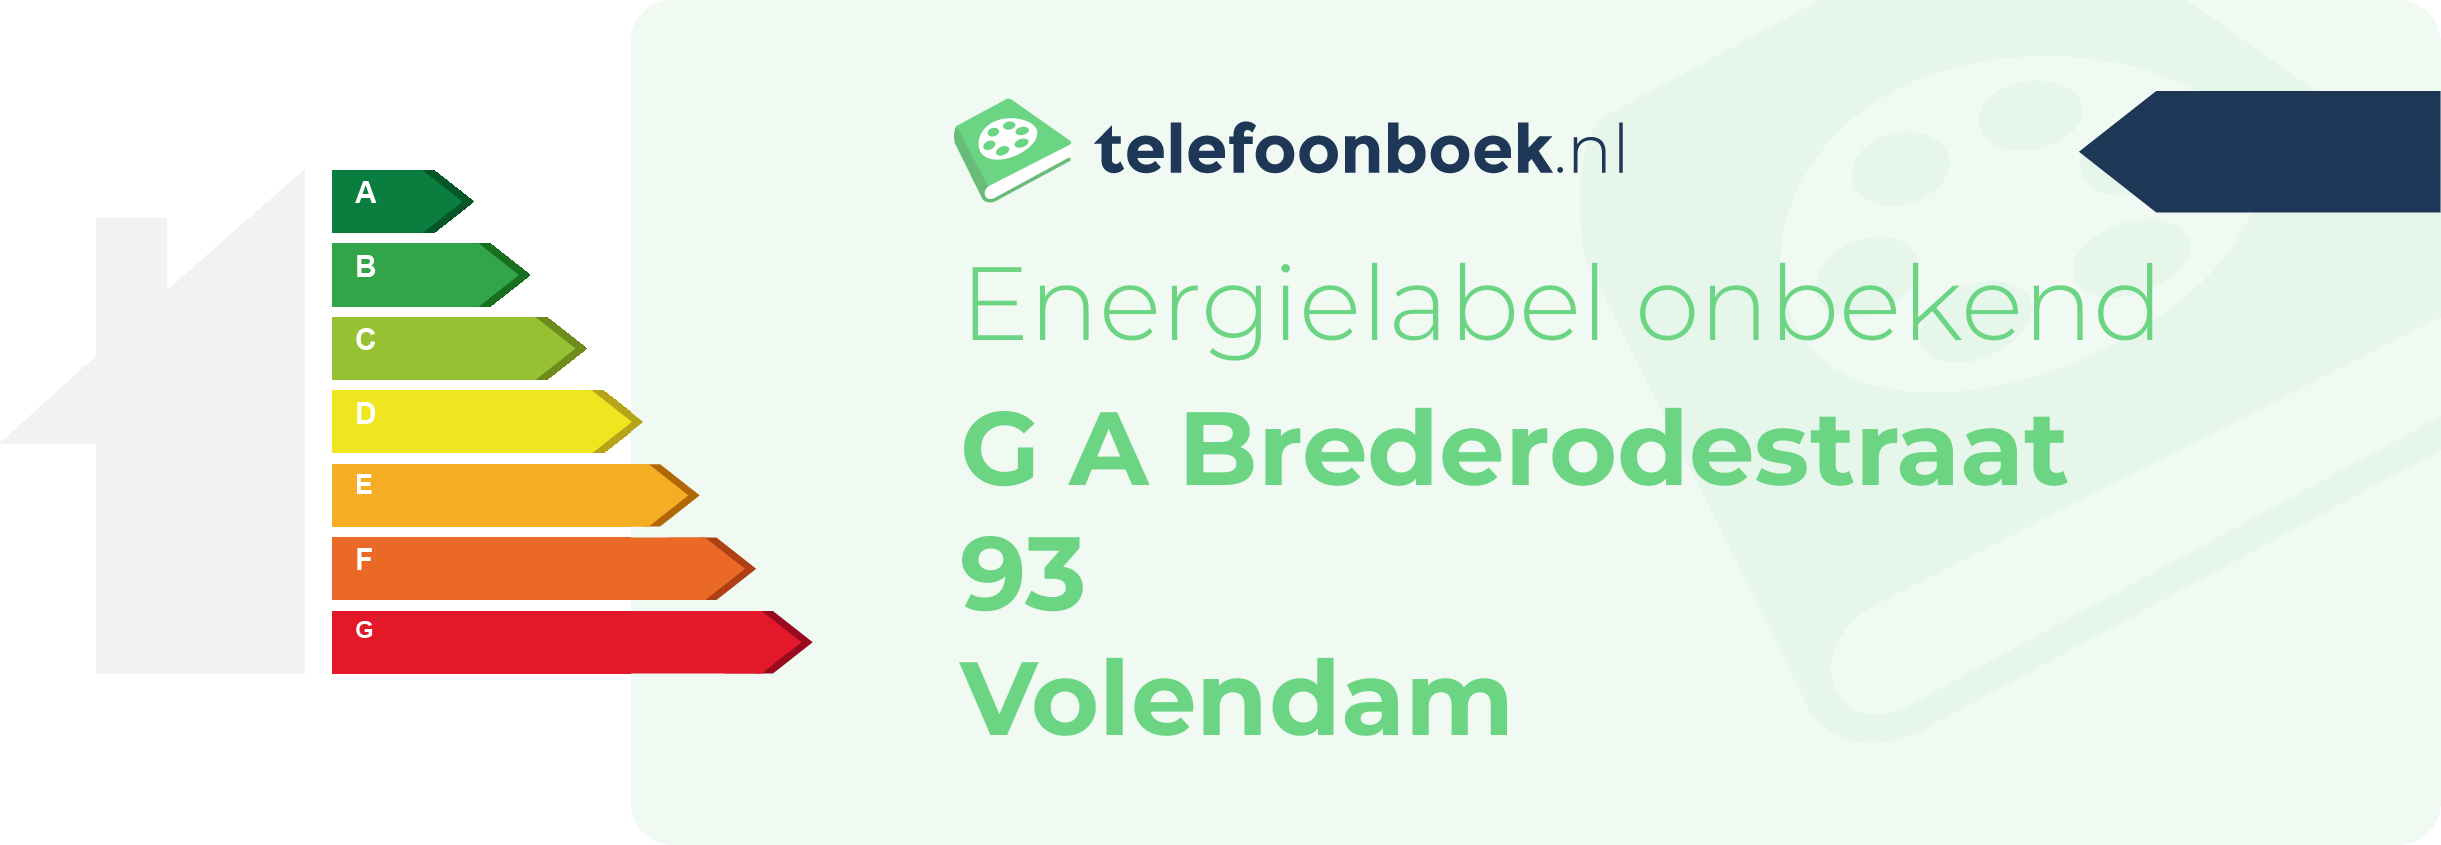 Energielabel G A Brederodestraat 93 Volendam